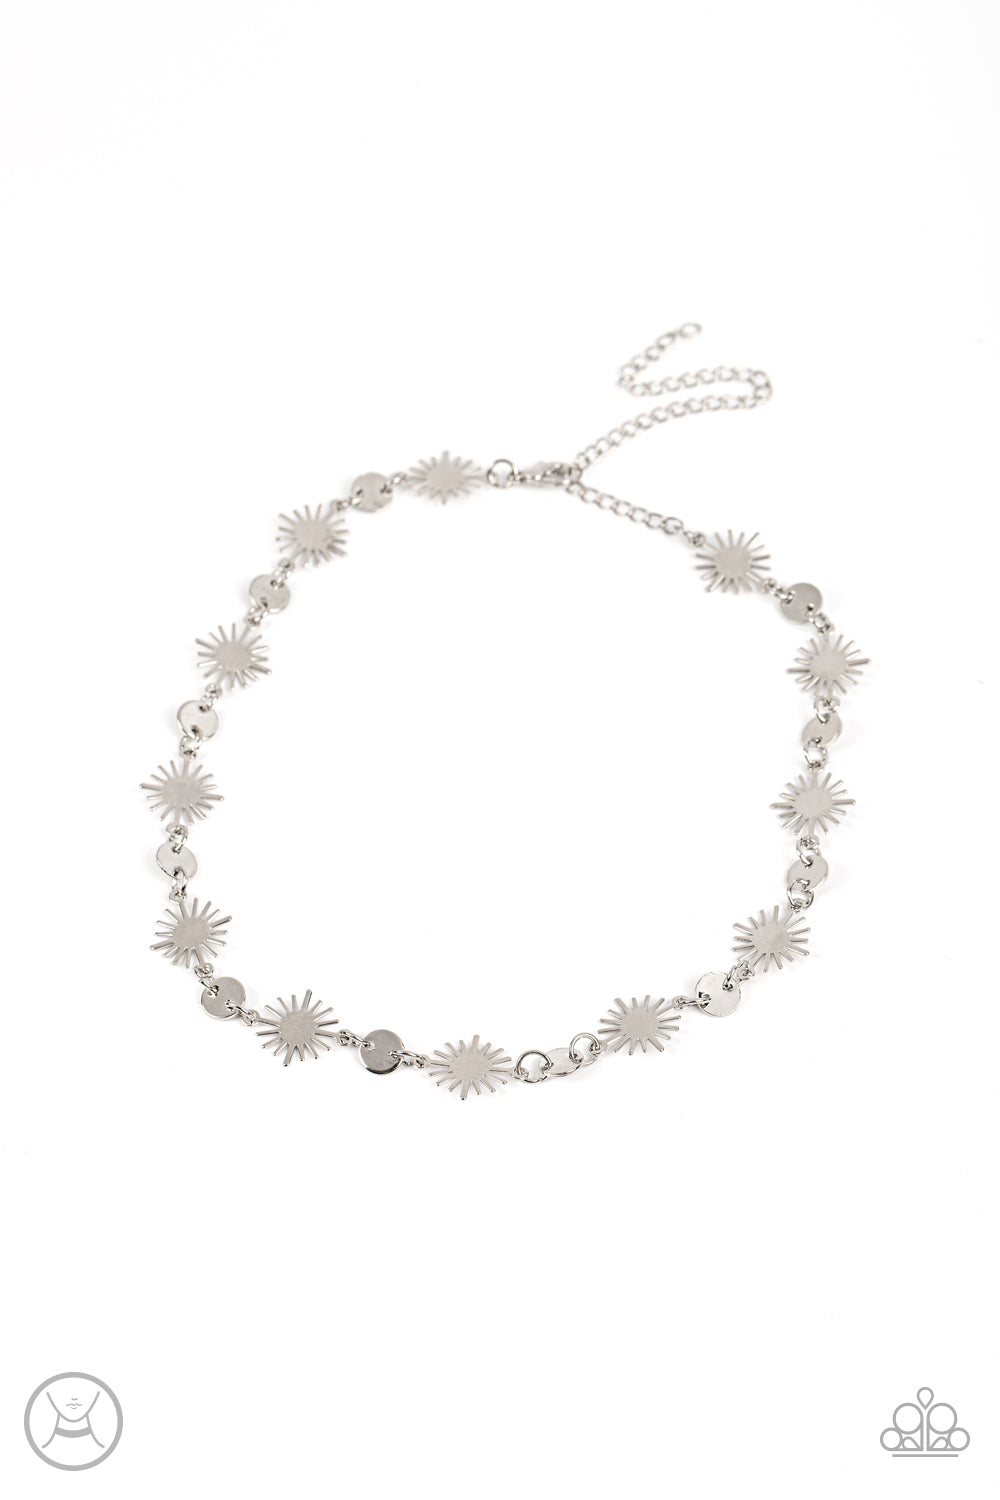 paparazzi-accessories-astro-goddess-silver-necklace